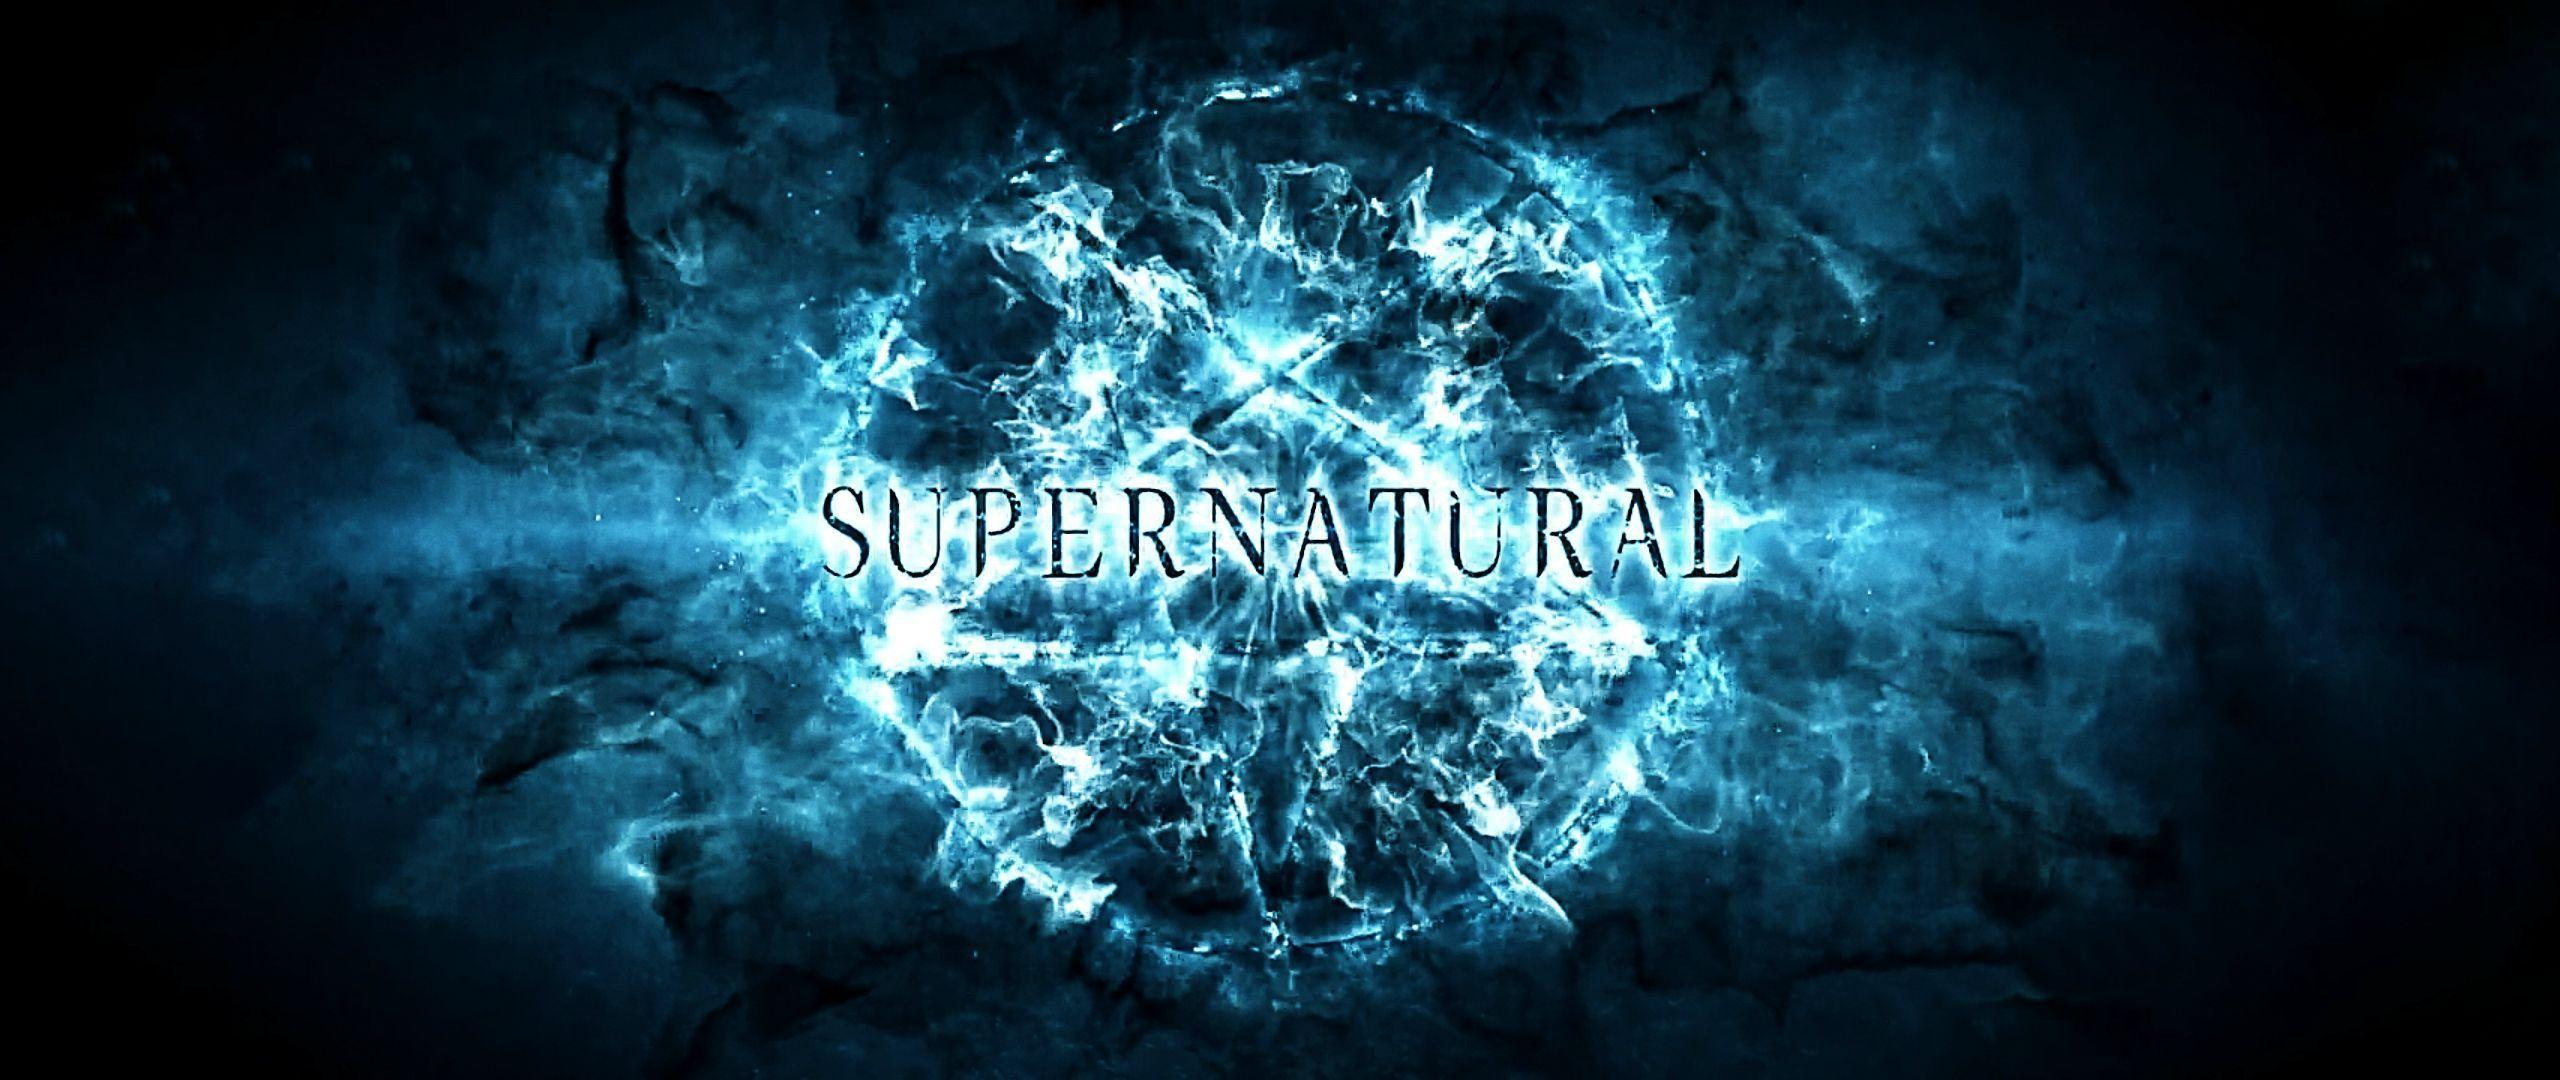 Season 10. Supernatural, Supernatural season 10 and Supernatural